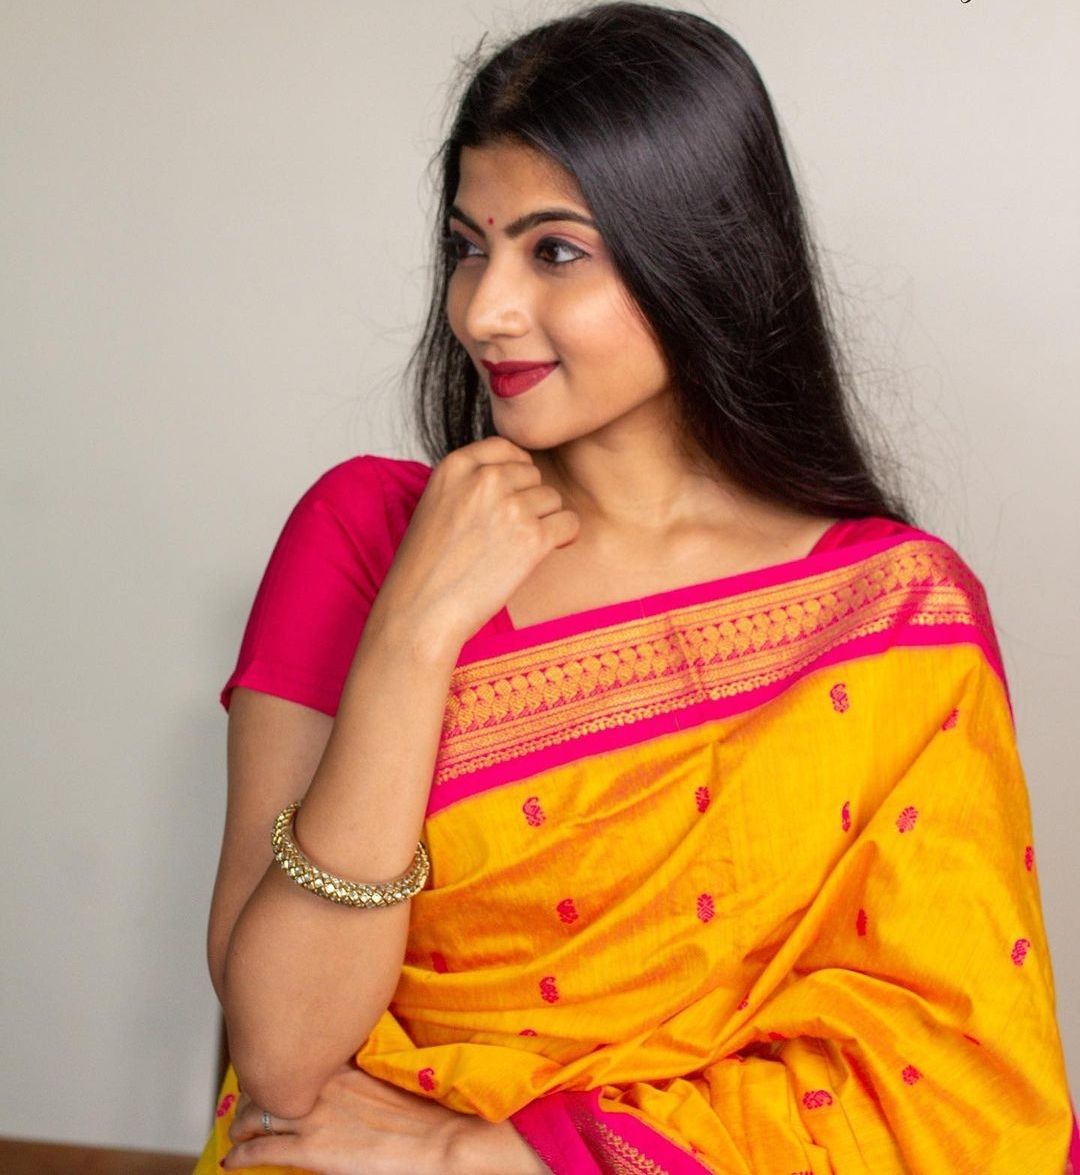 Unique Queen's Women's Premium Quality Kalyani Cotton Silk Saree with Zari  Border with running Blouse 007